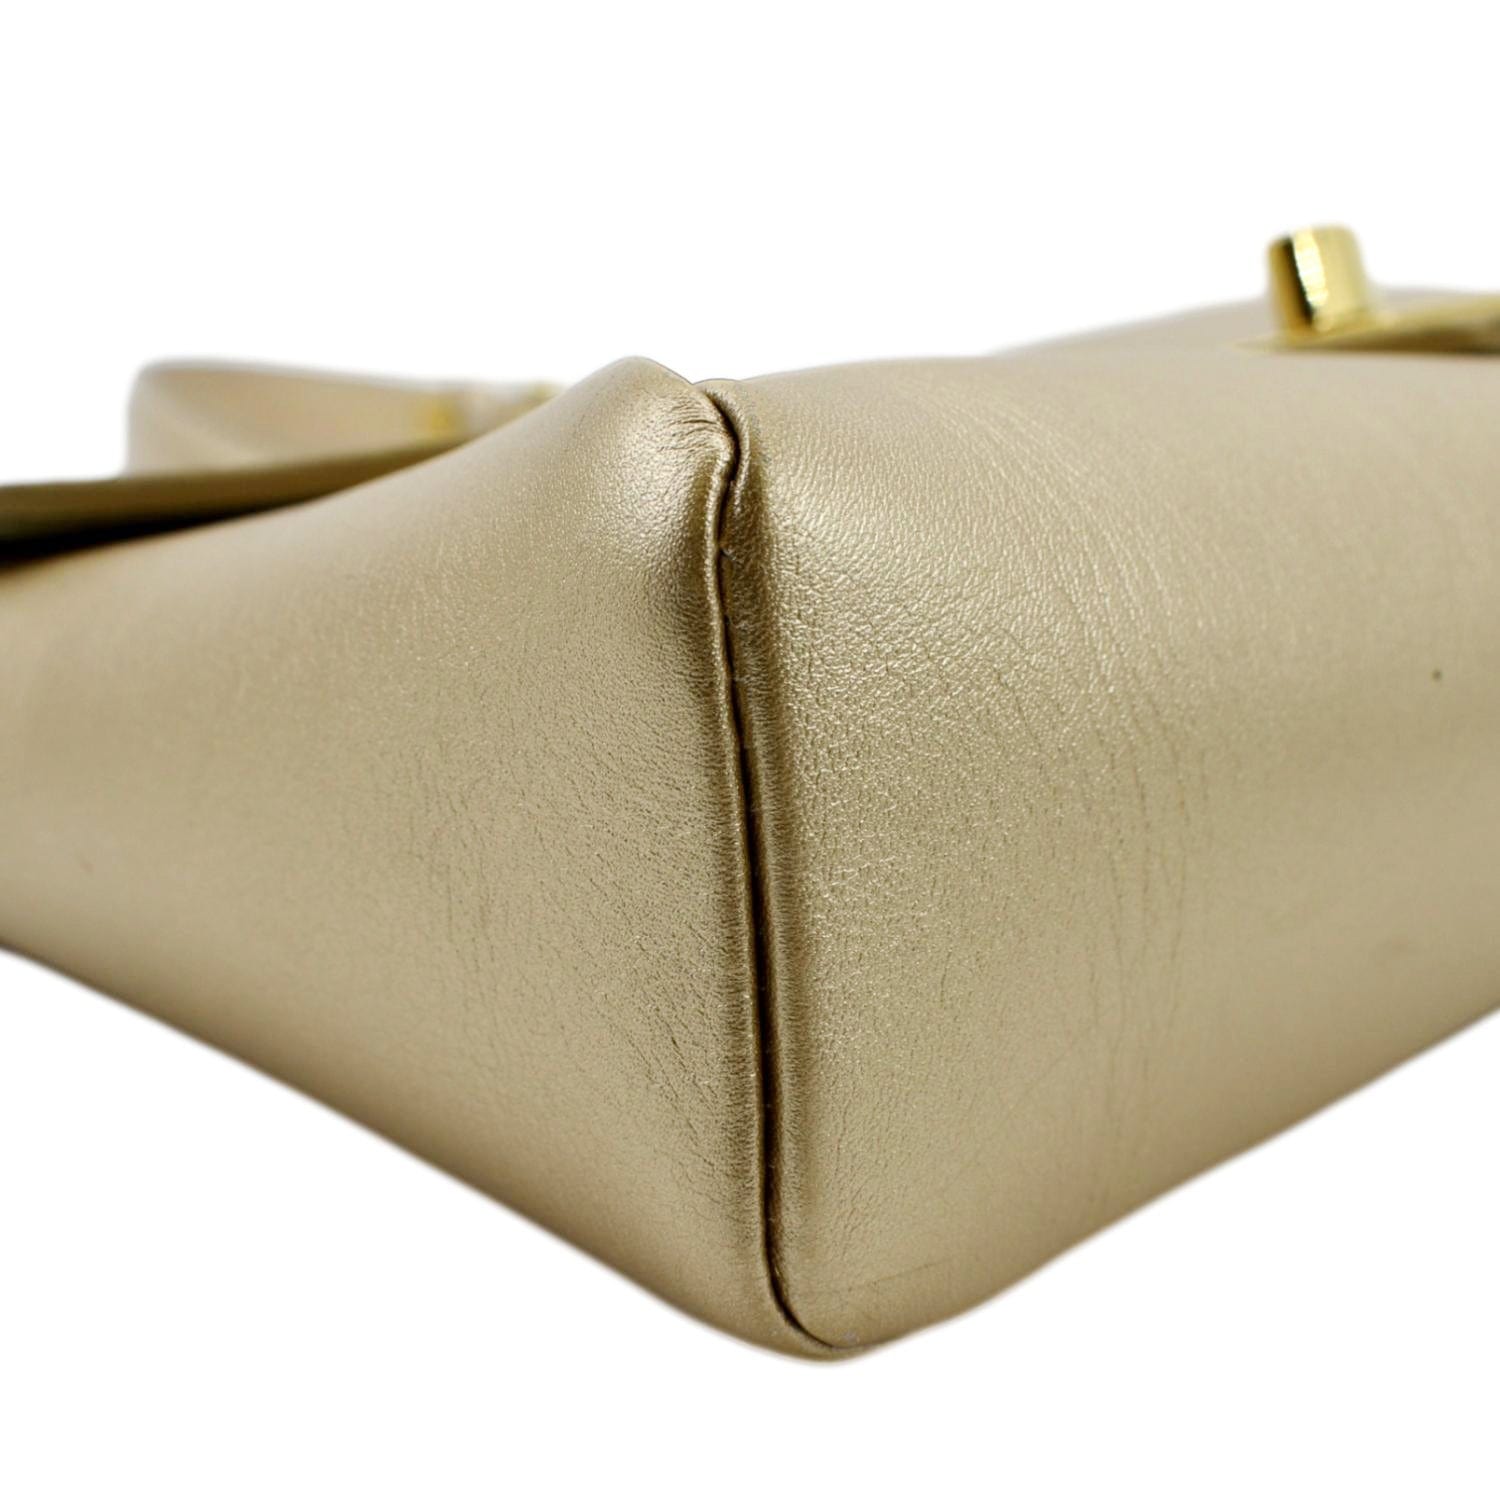 Designer Handbags, Authentic Gently Loved Louis Vuitton